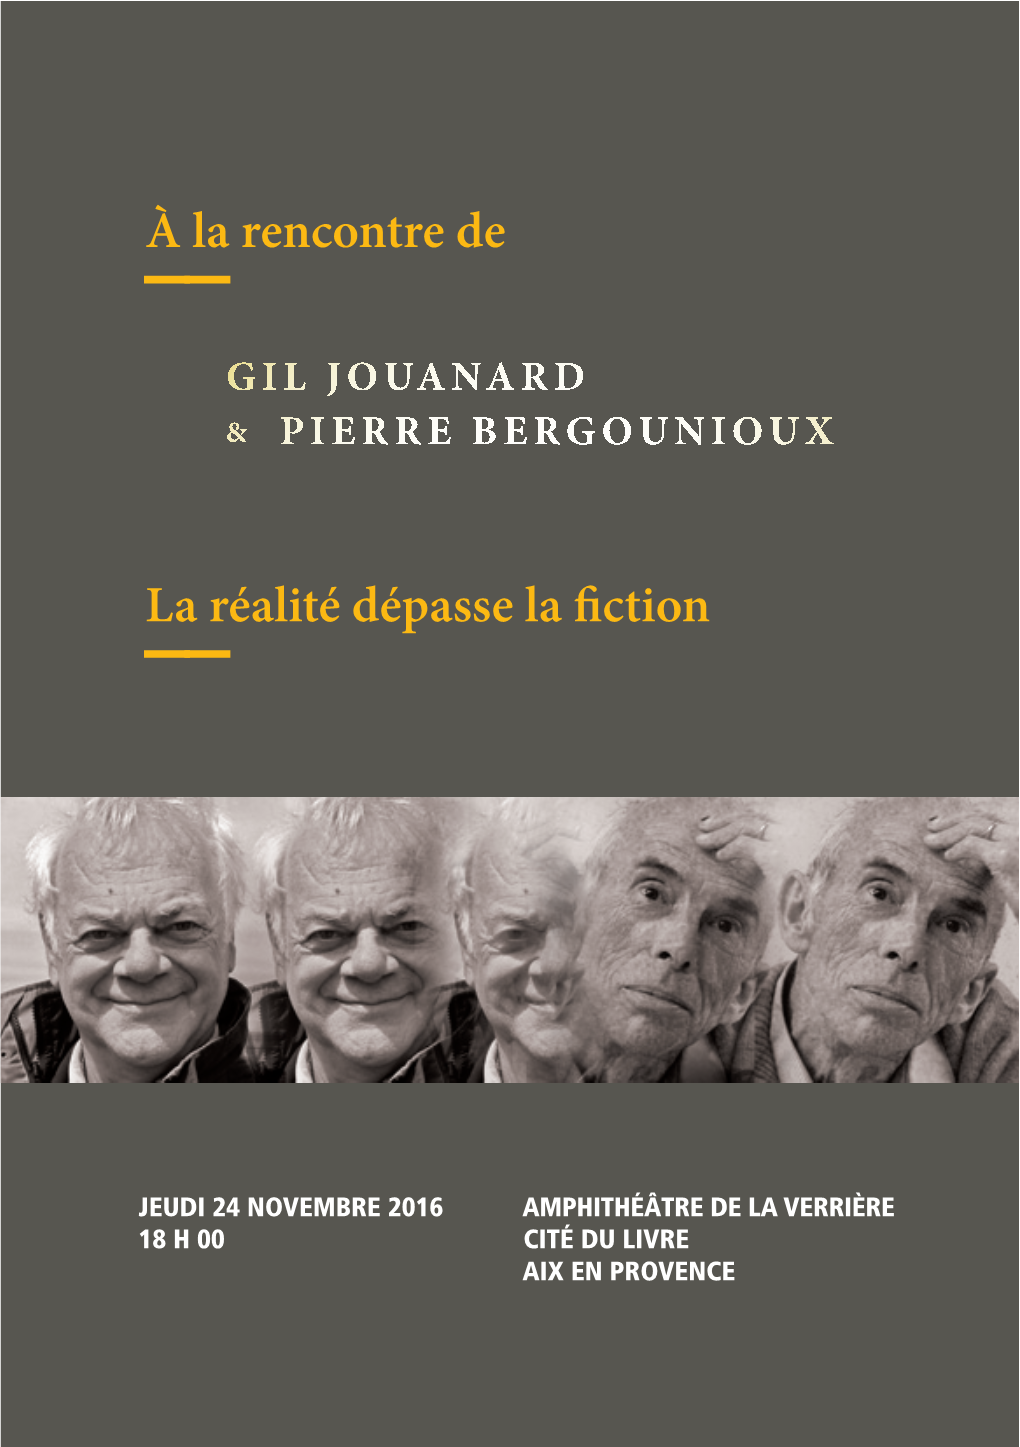 Gil Jouanard & Pierre Bergounioux